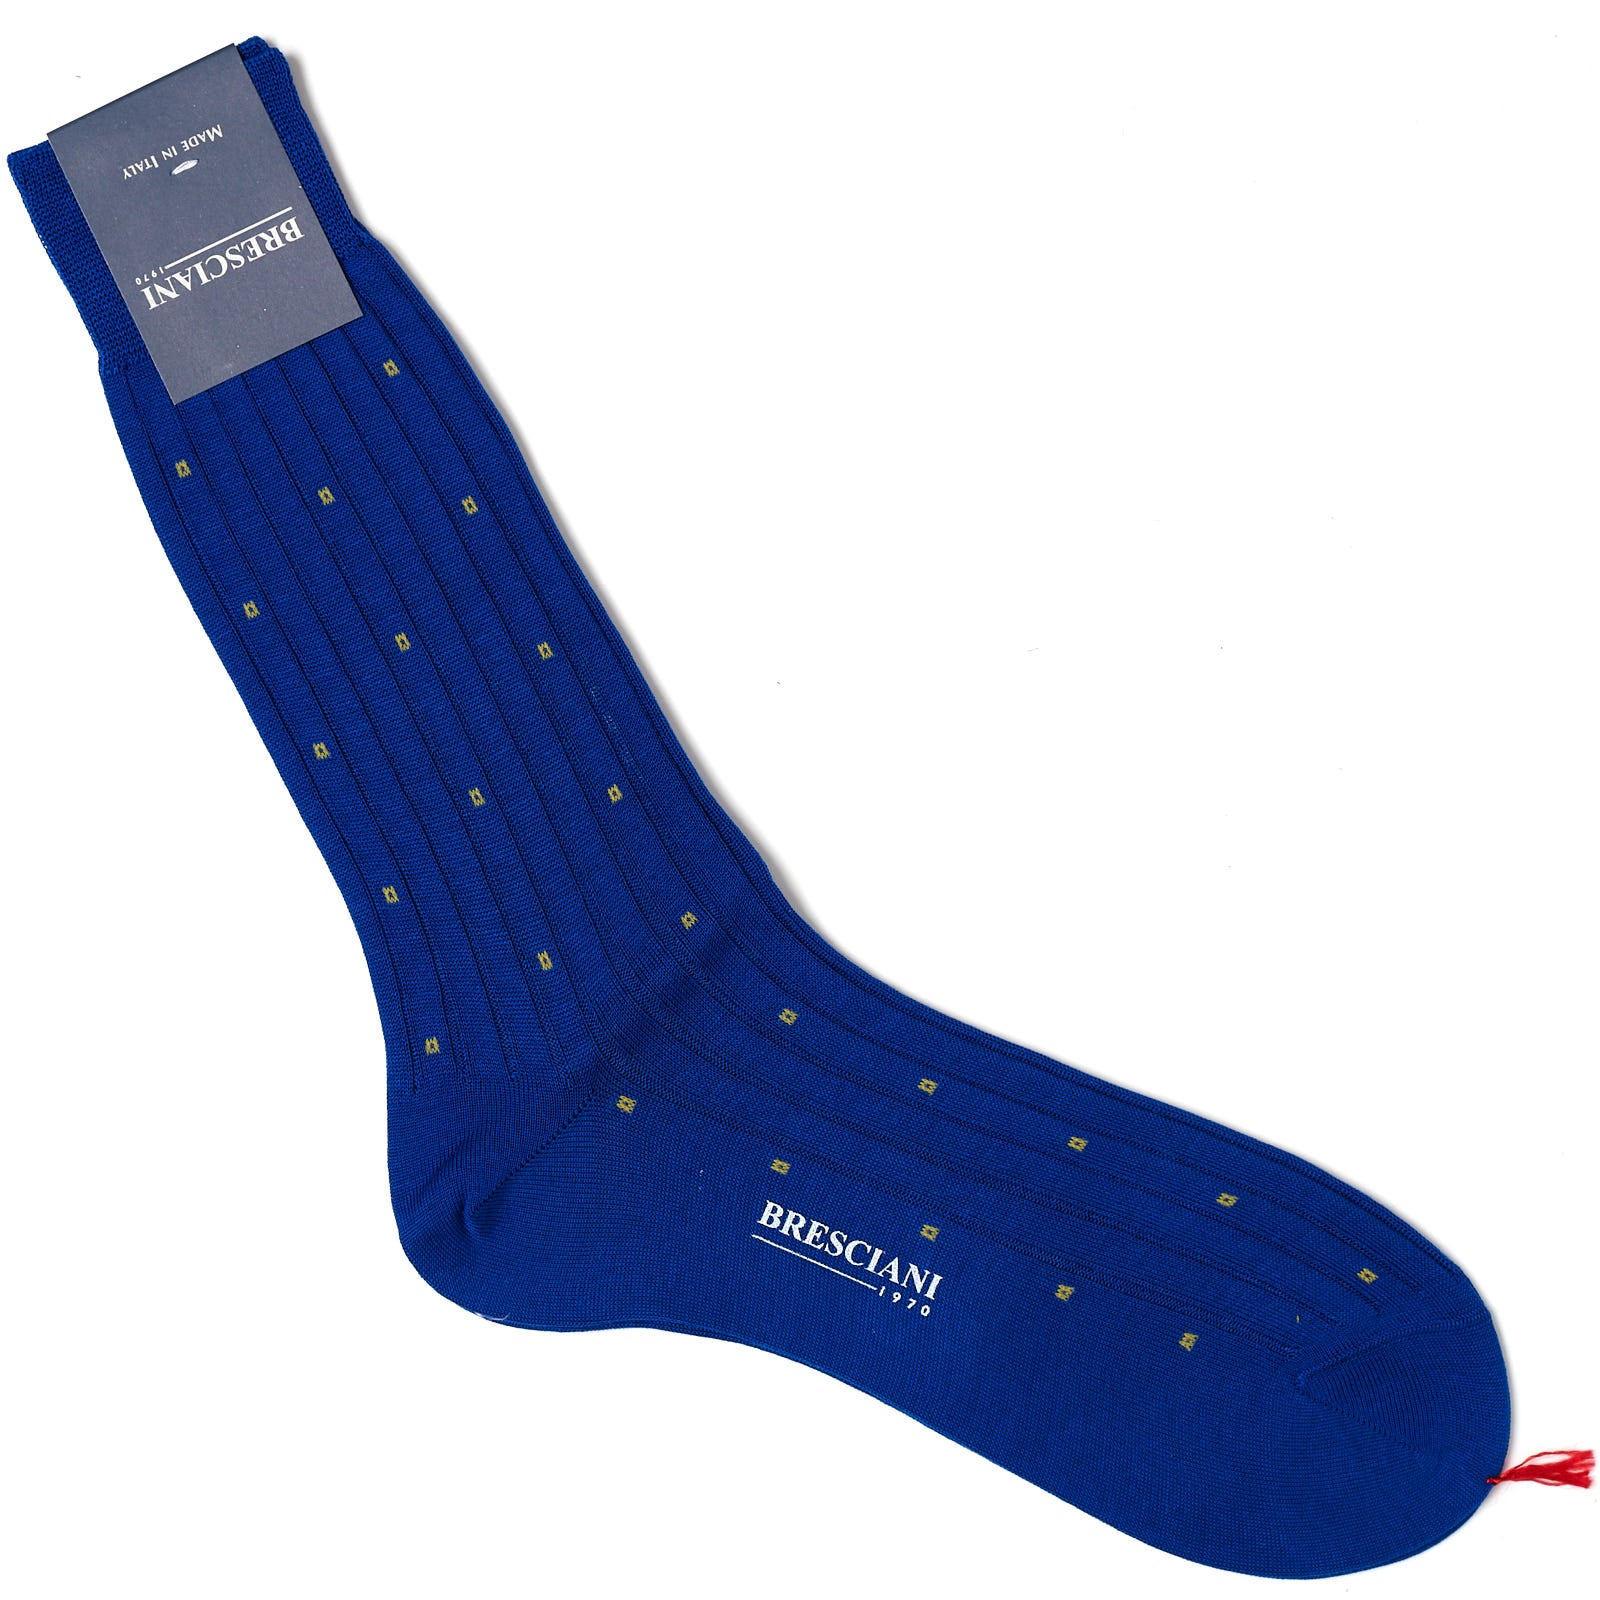 BRESCIANI Cotton Polka Dot Design Mid Calf Length Socks M-L